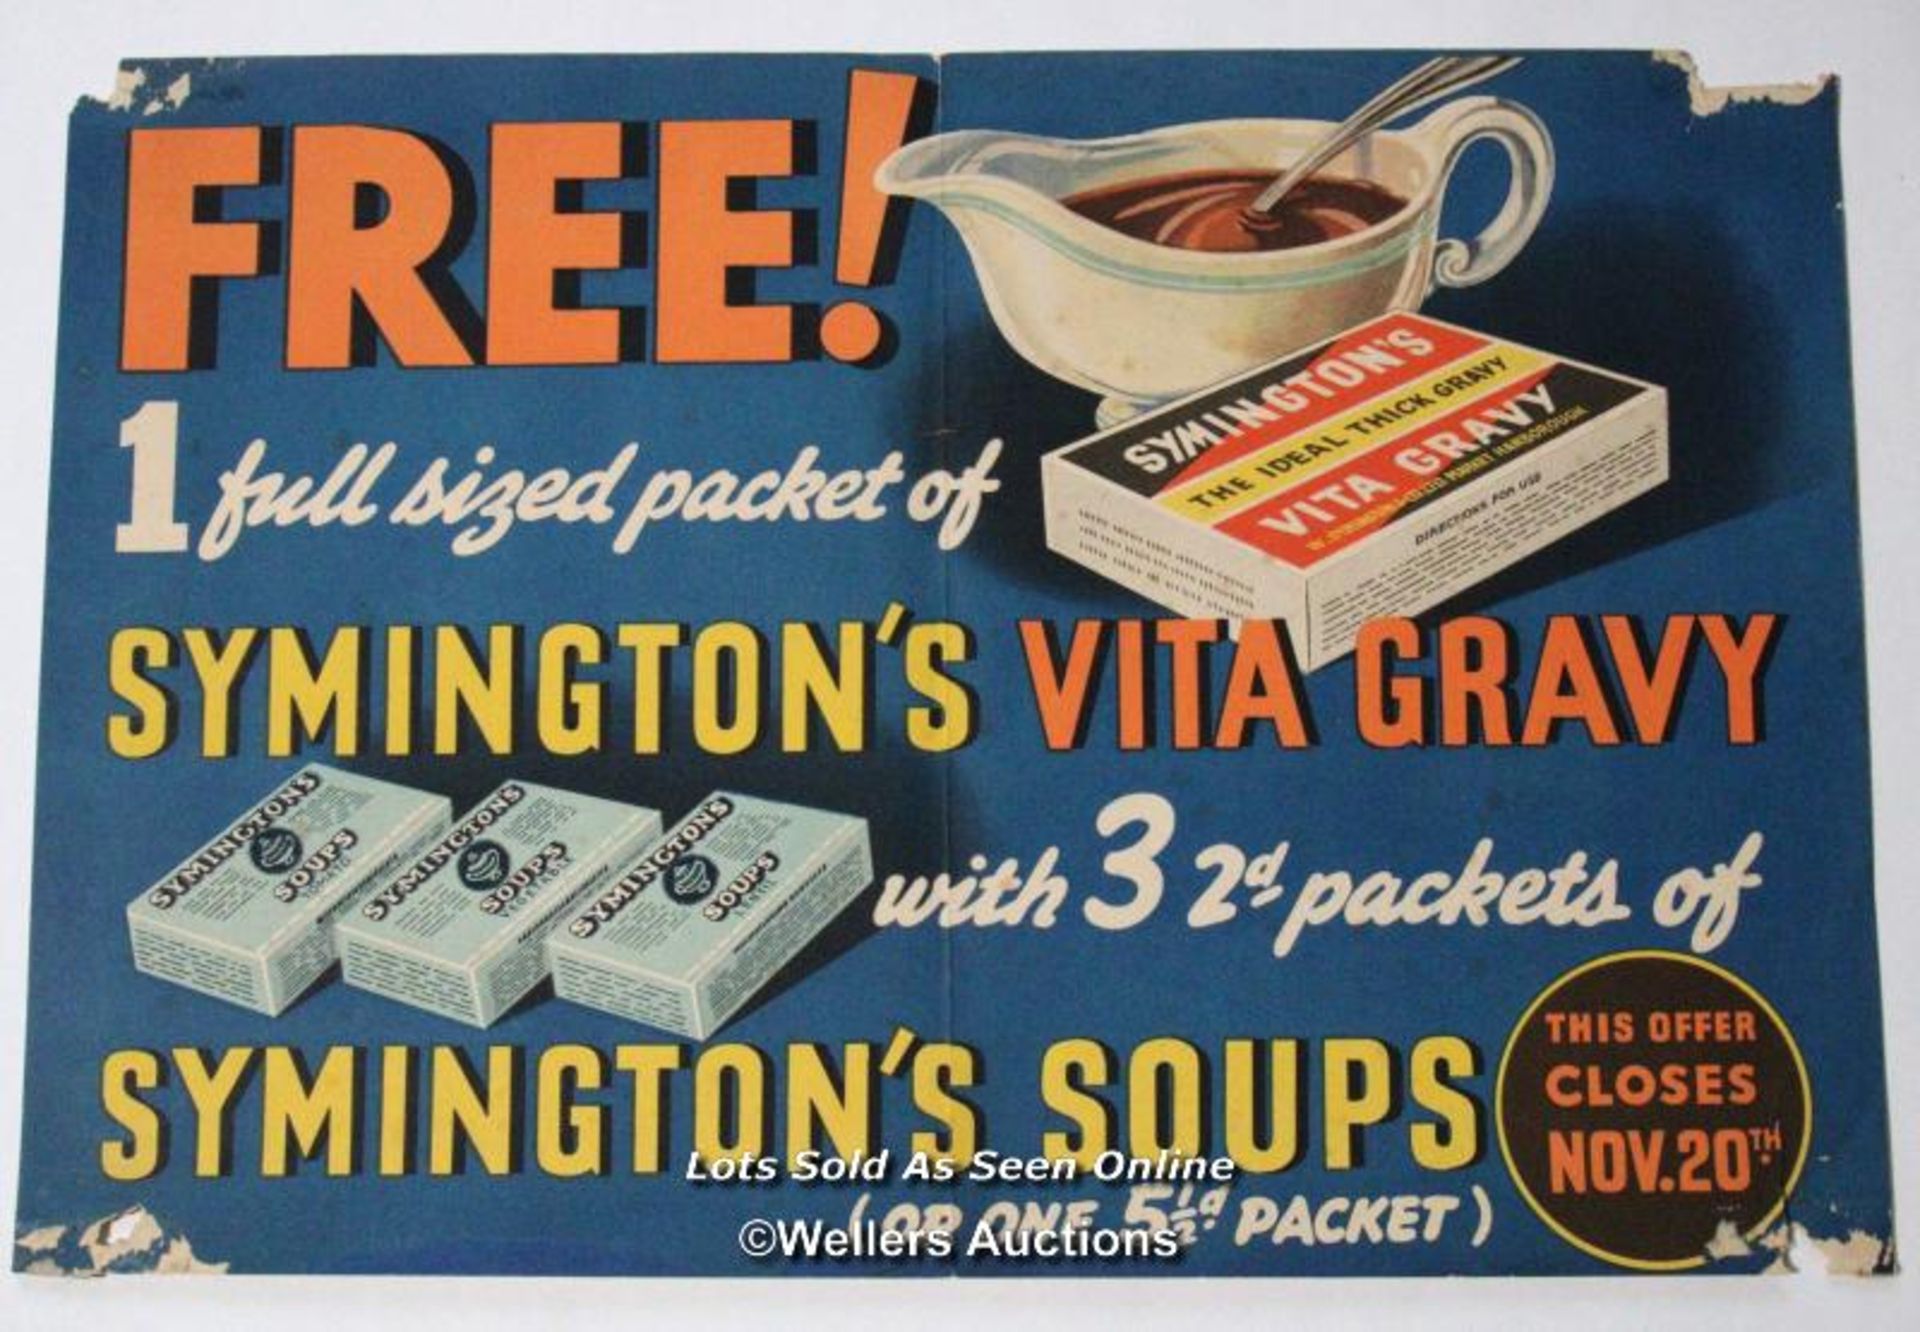 Vintage Symingtons Gravy poster